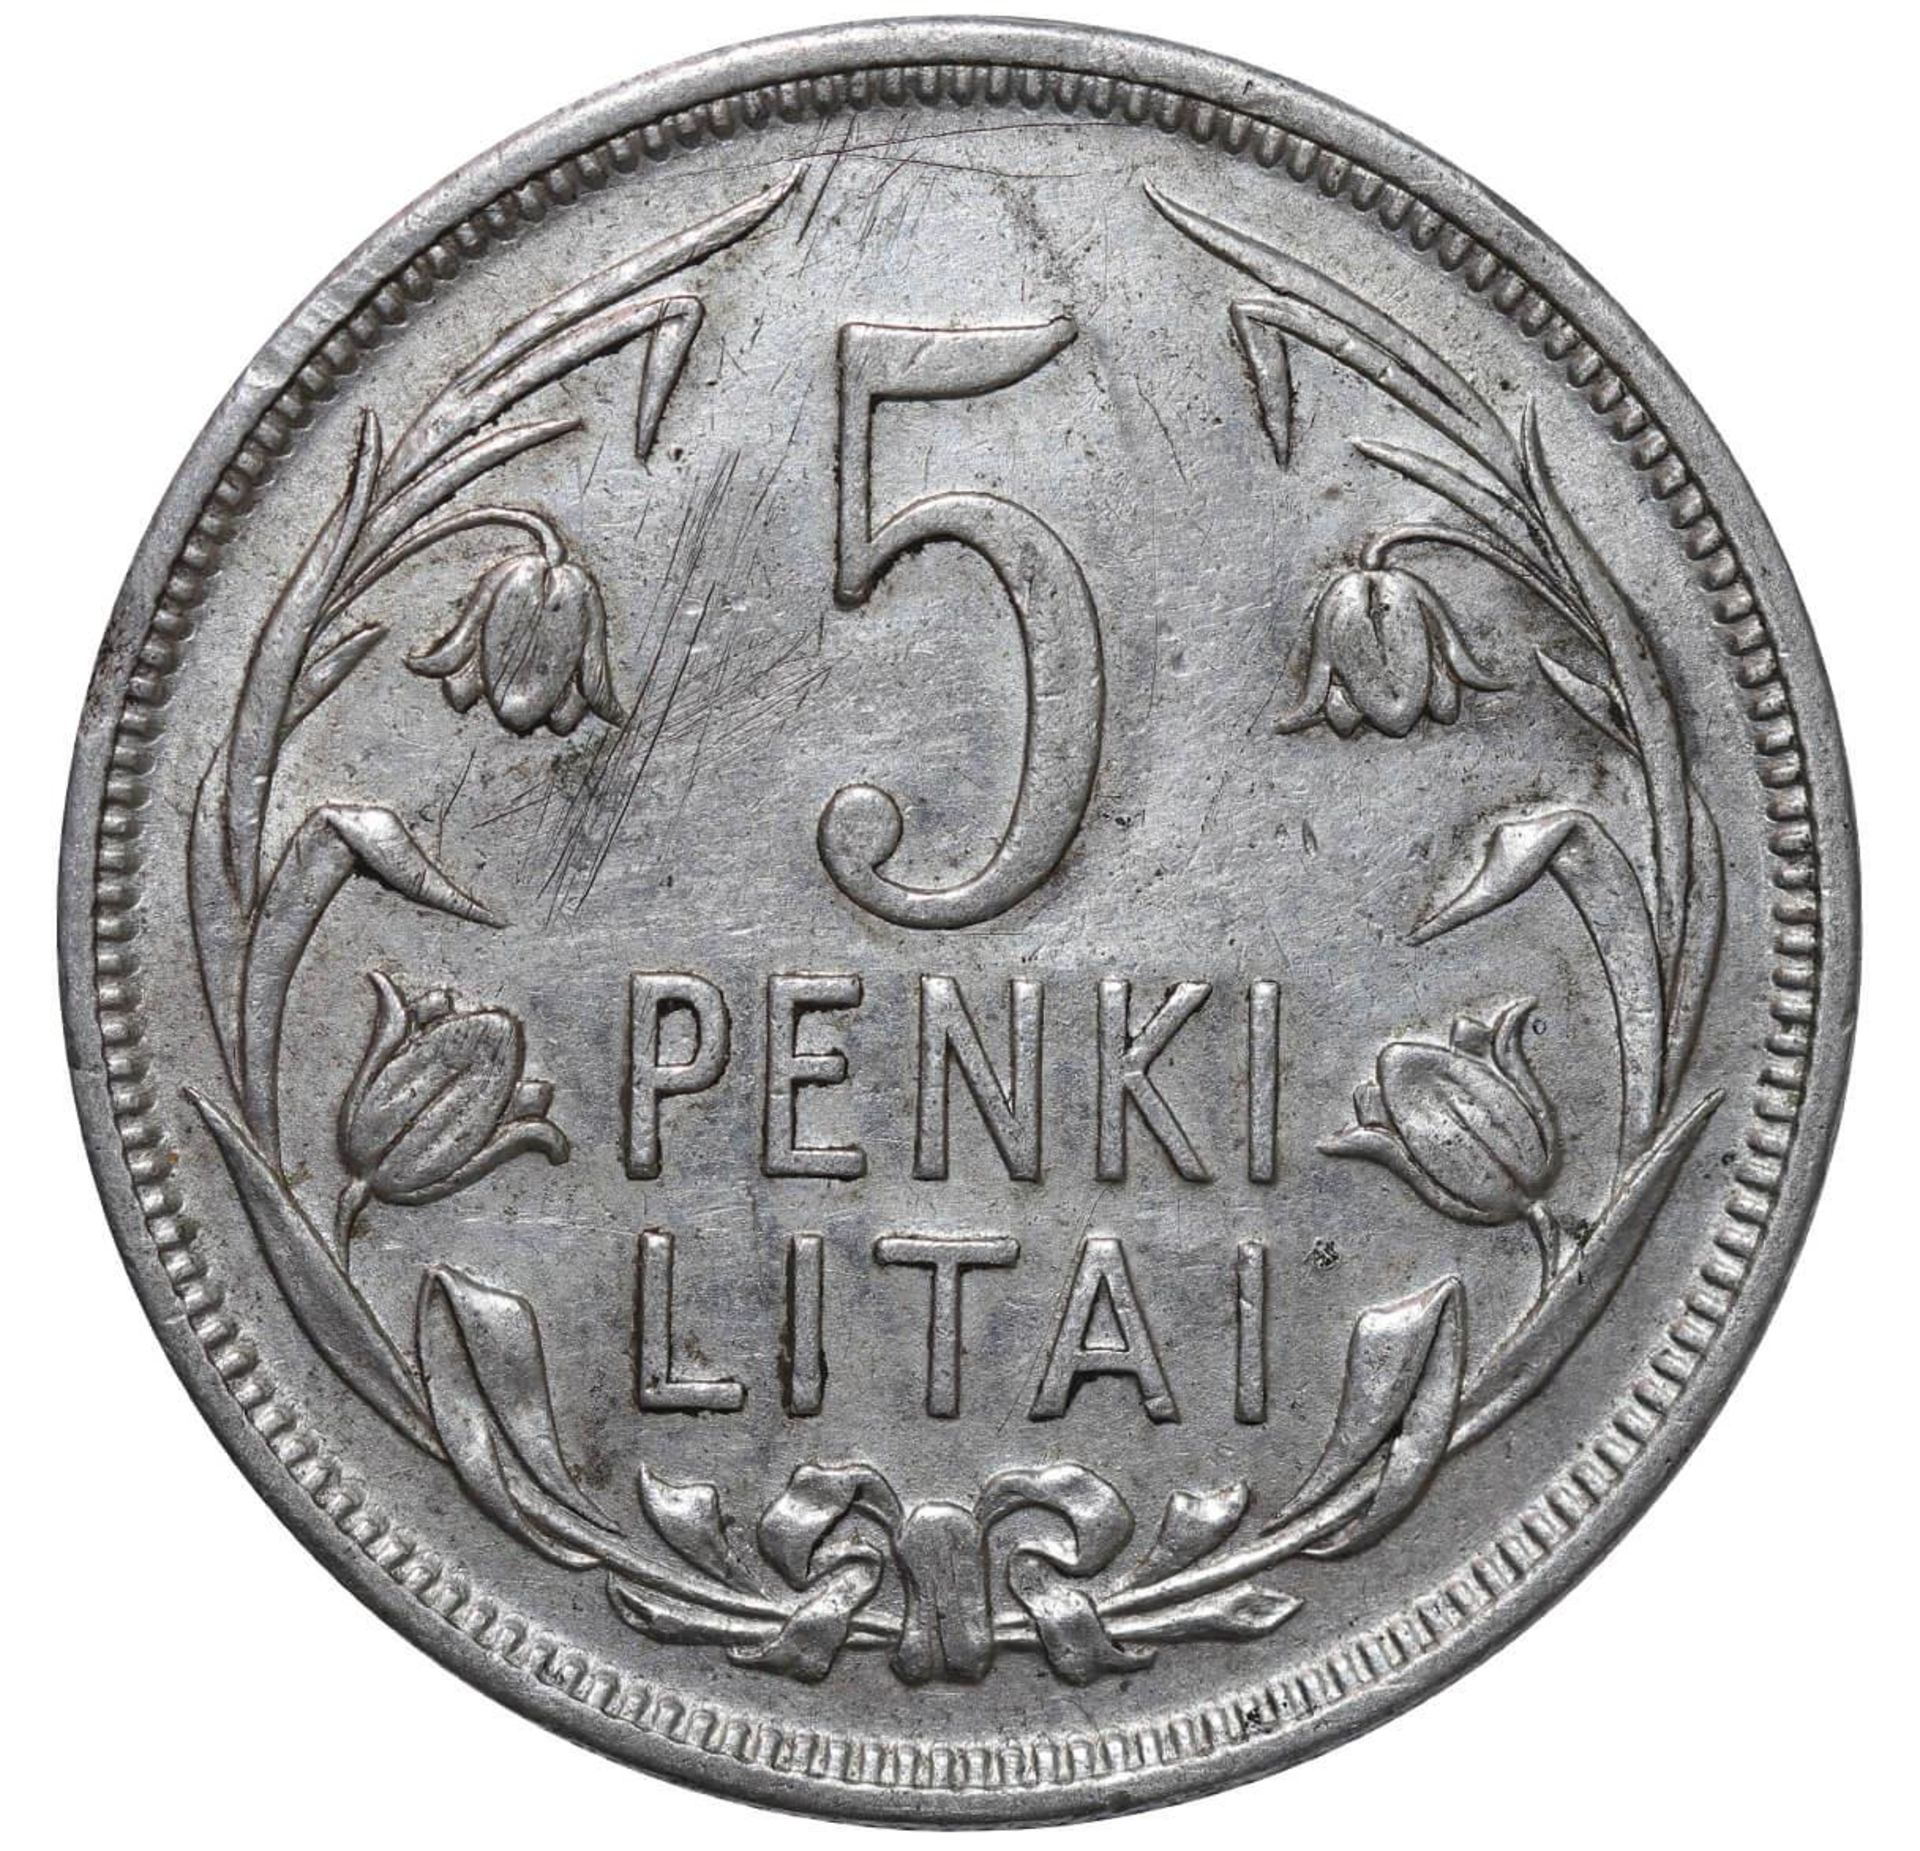 Lithuania, 5 Penki Litai, 1925 year - Image 2 of 3